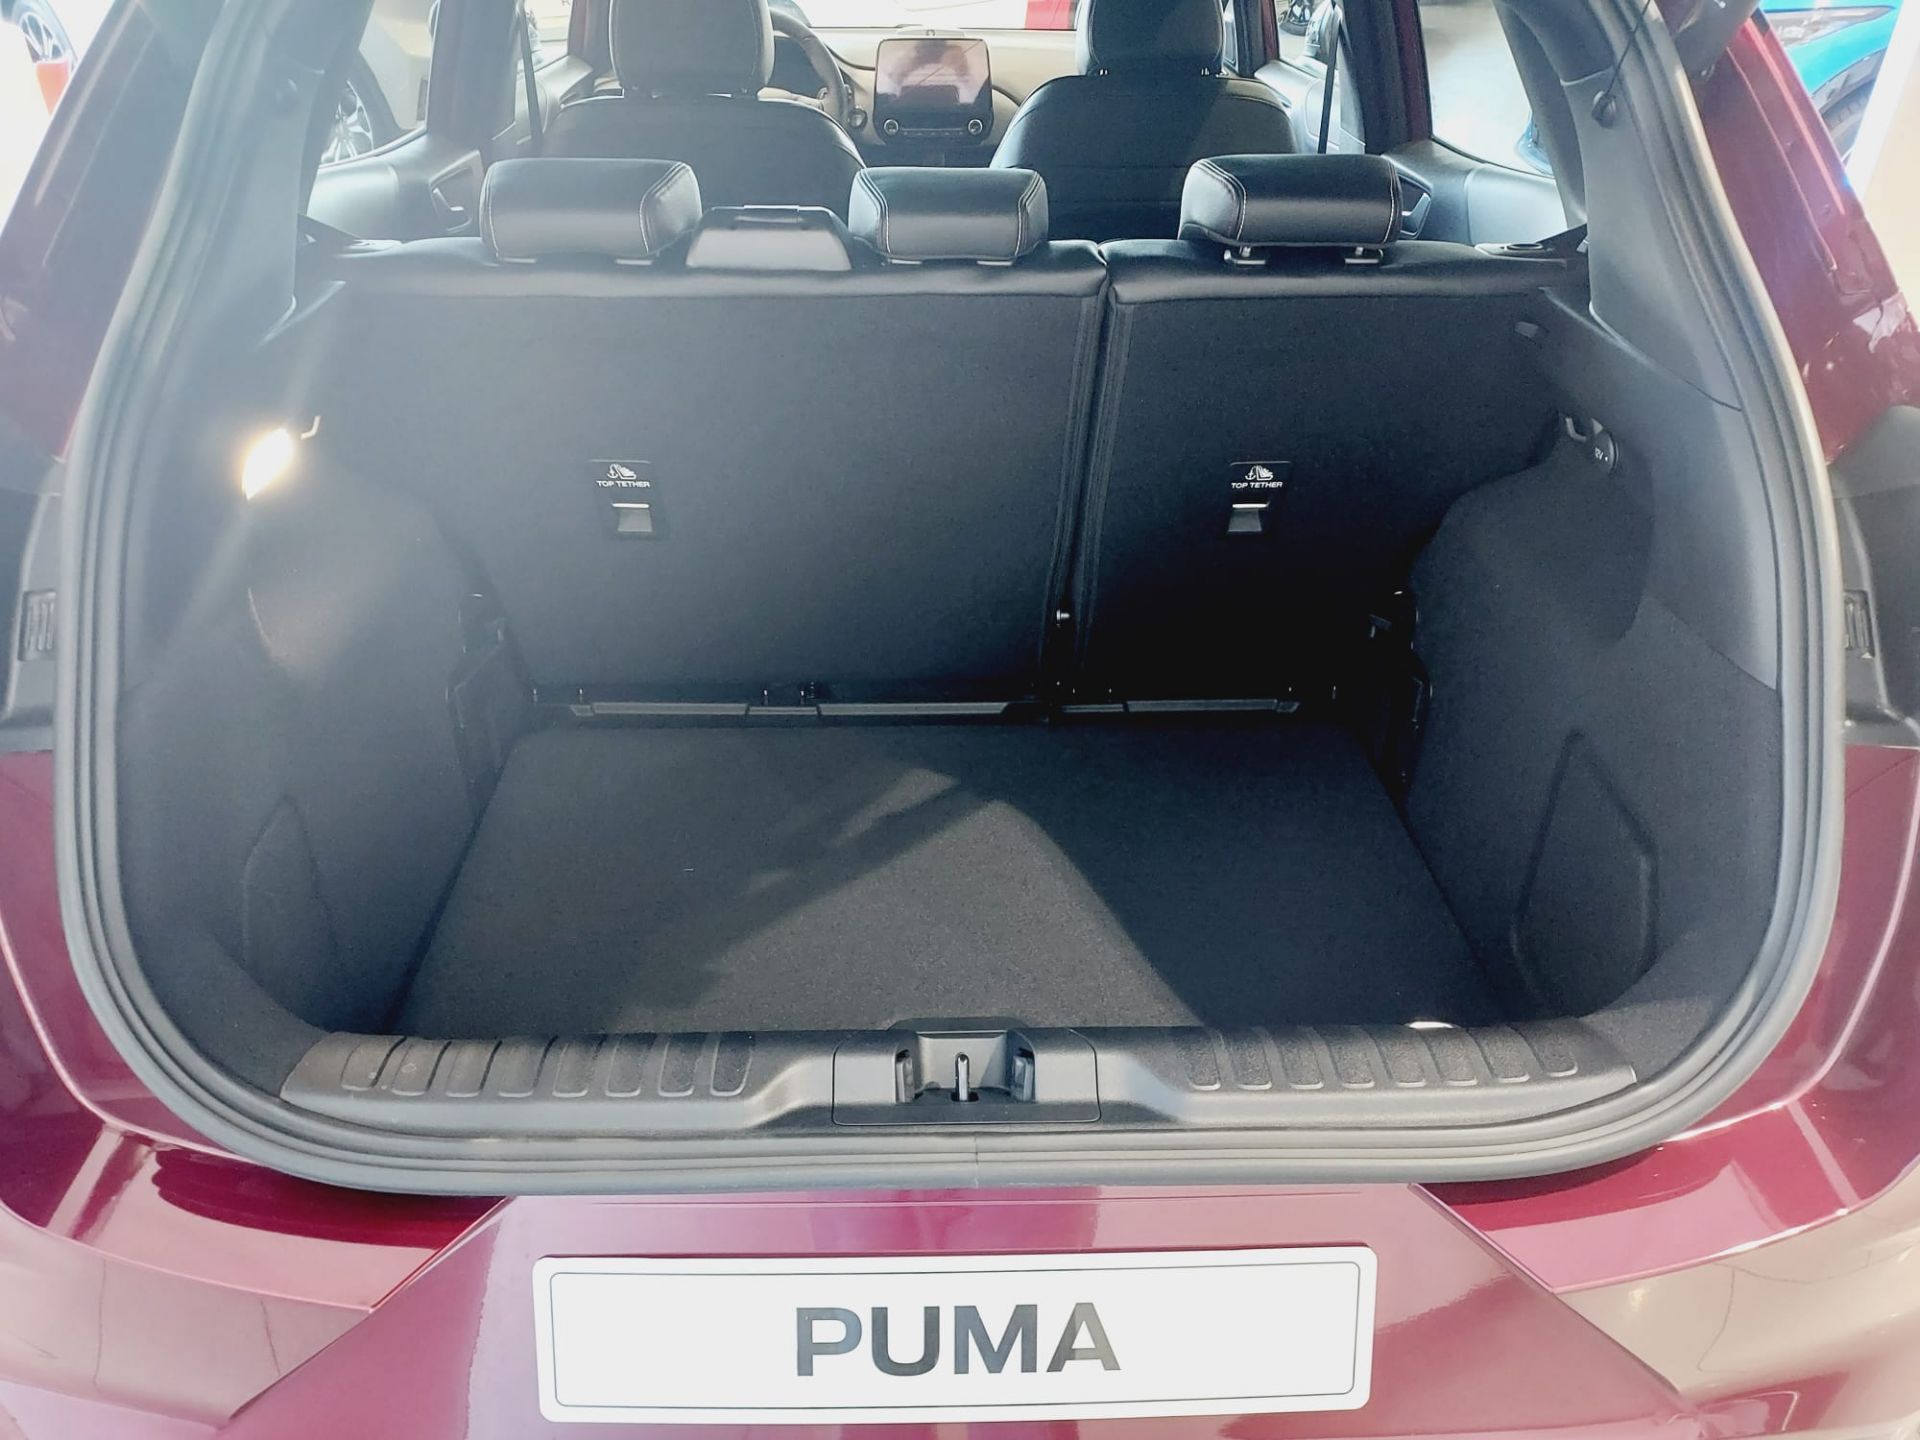 Ford Puma 1.0 EcoBoost 125cv Vivid Ruby Edit. MHEV nuevo Barcelona